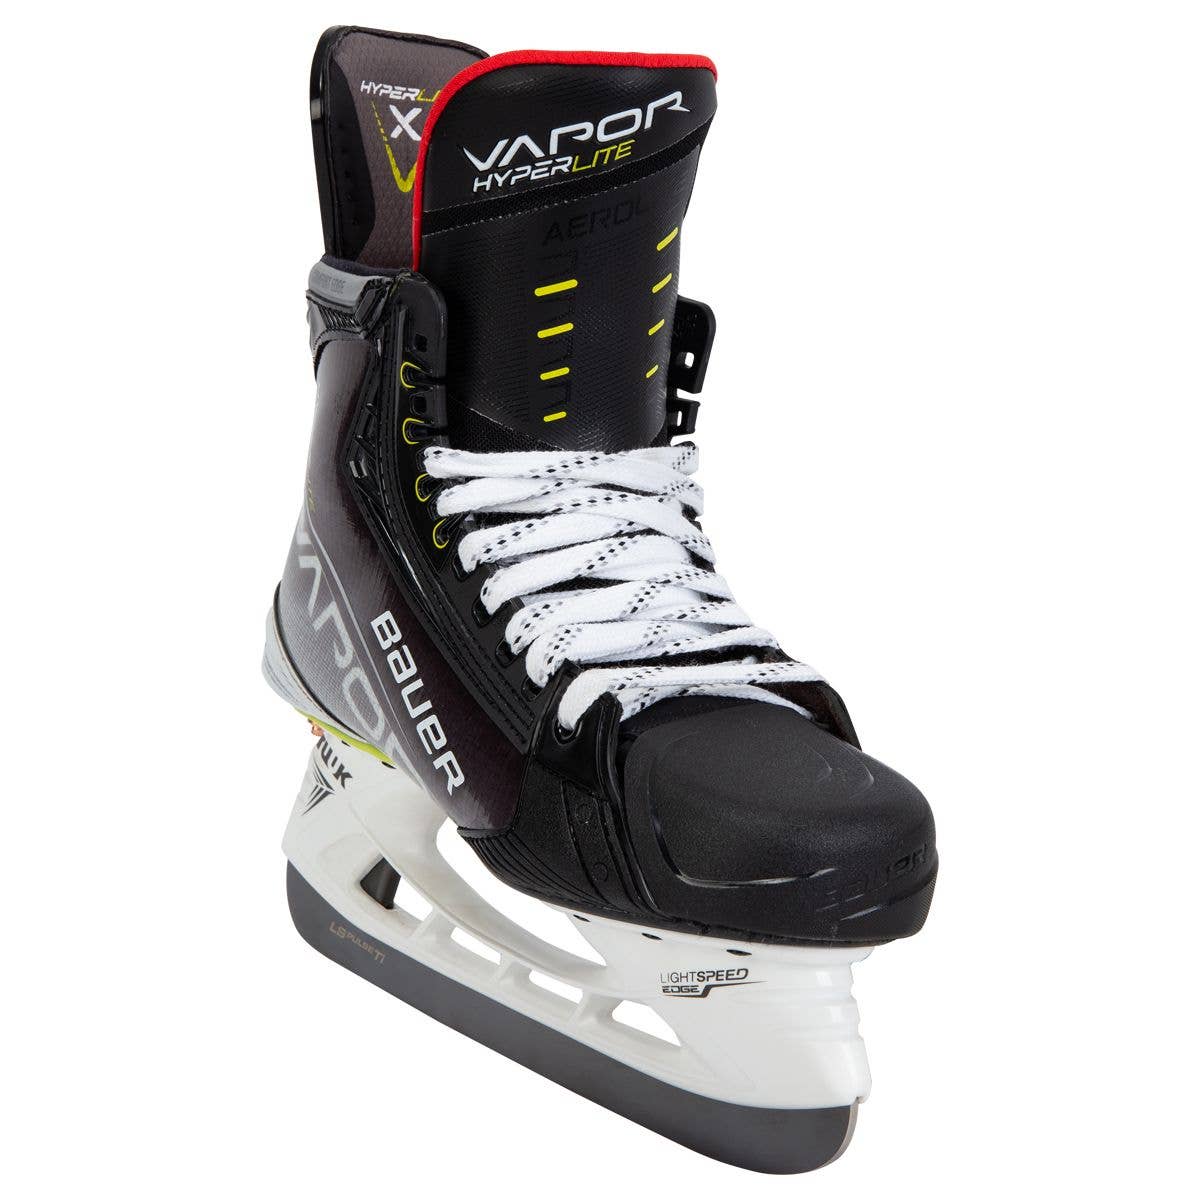 Bauer Vapor Hyperlite patins de hockey intermédiaire